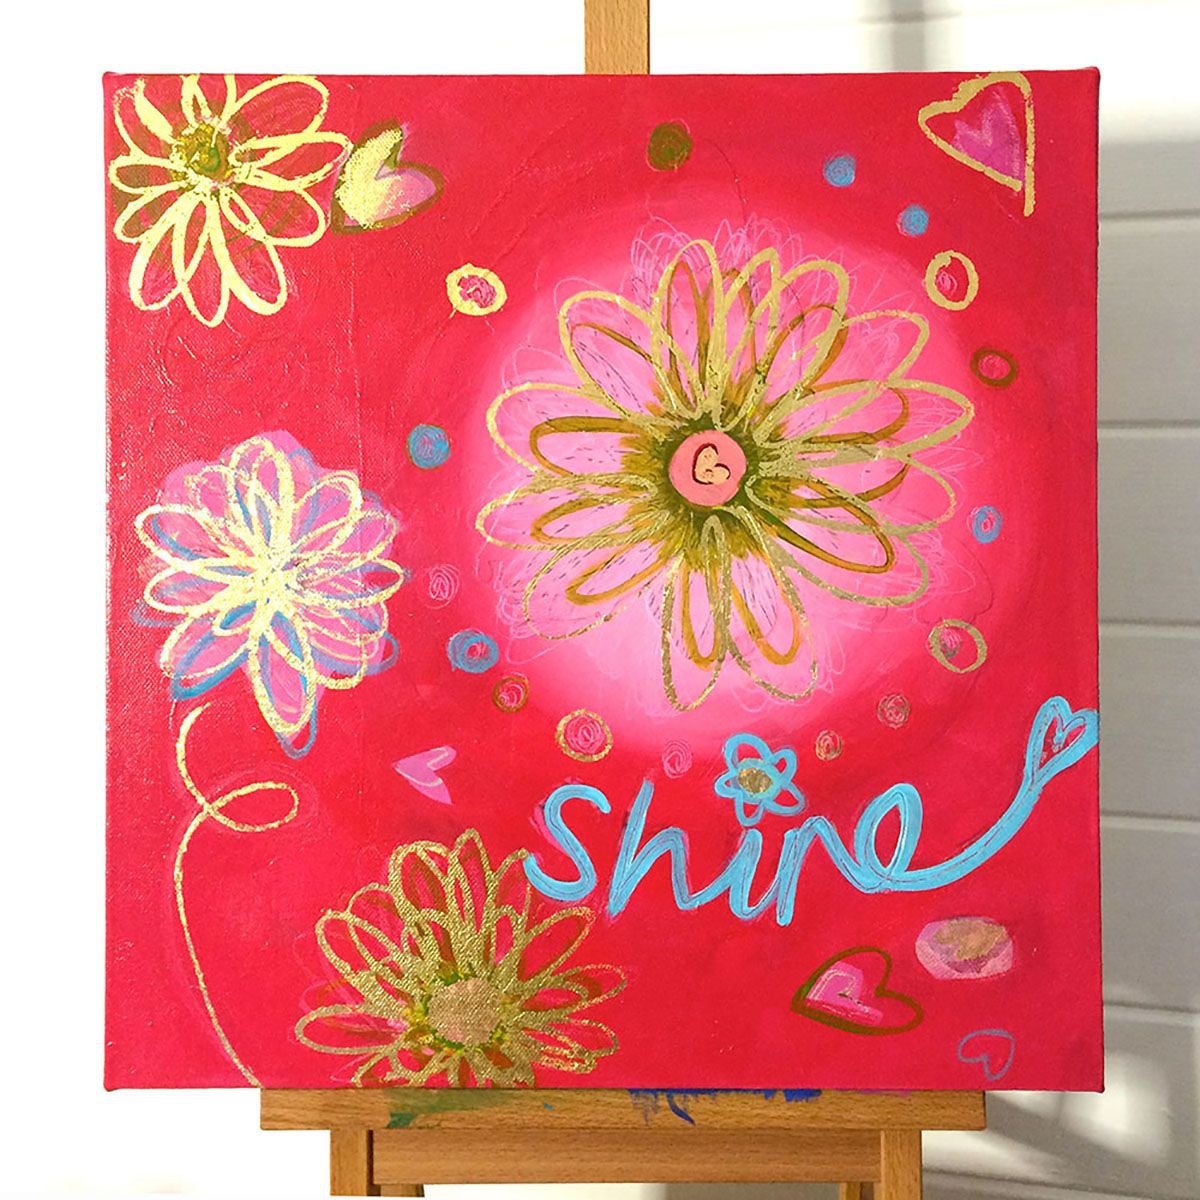 Shine by Suzie Cumming